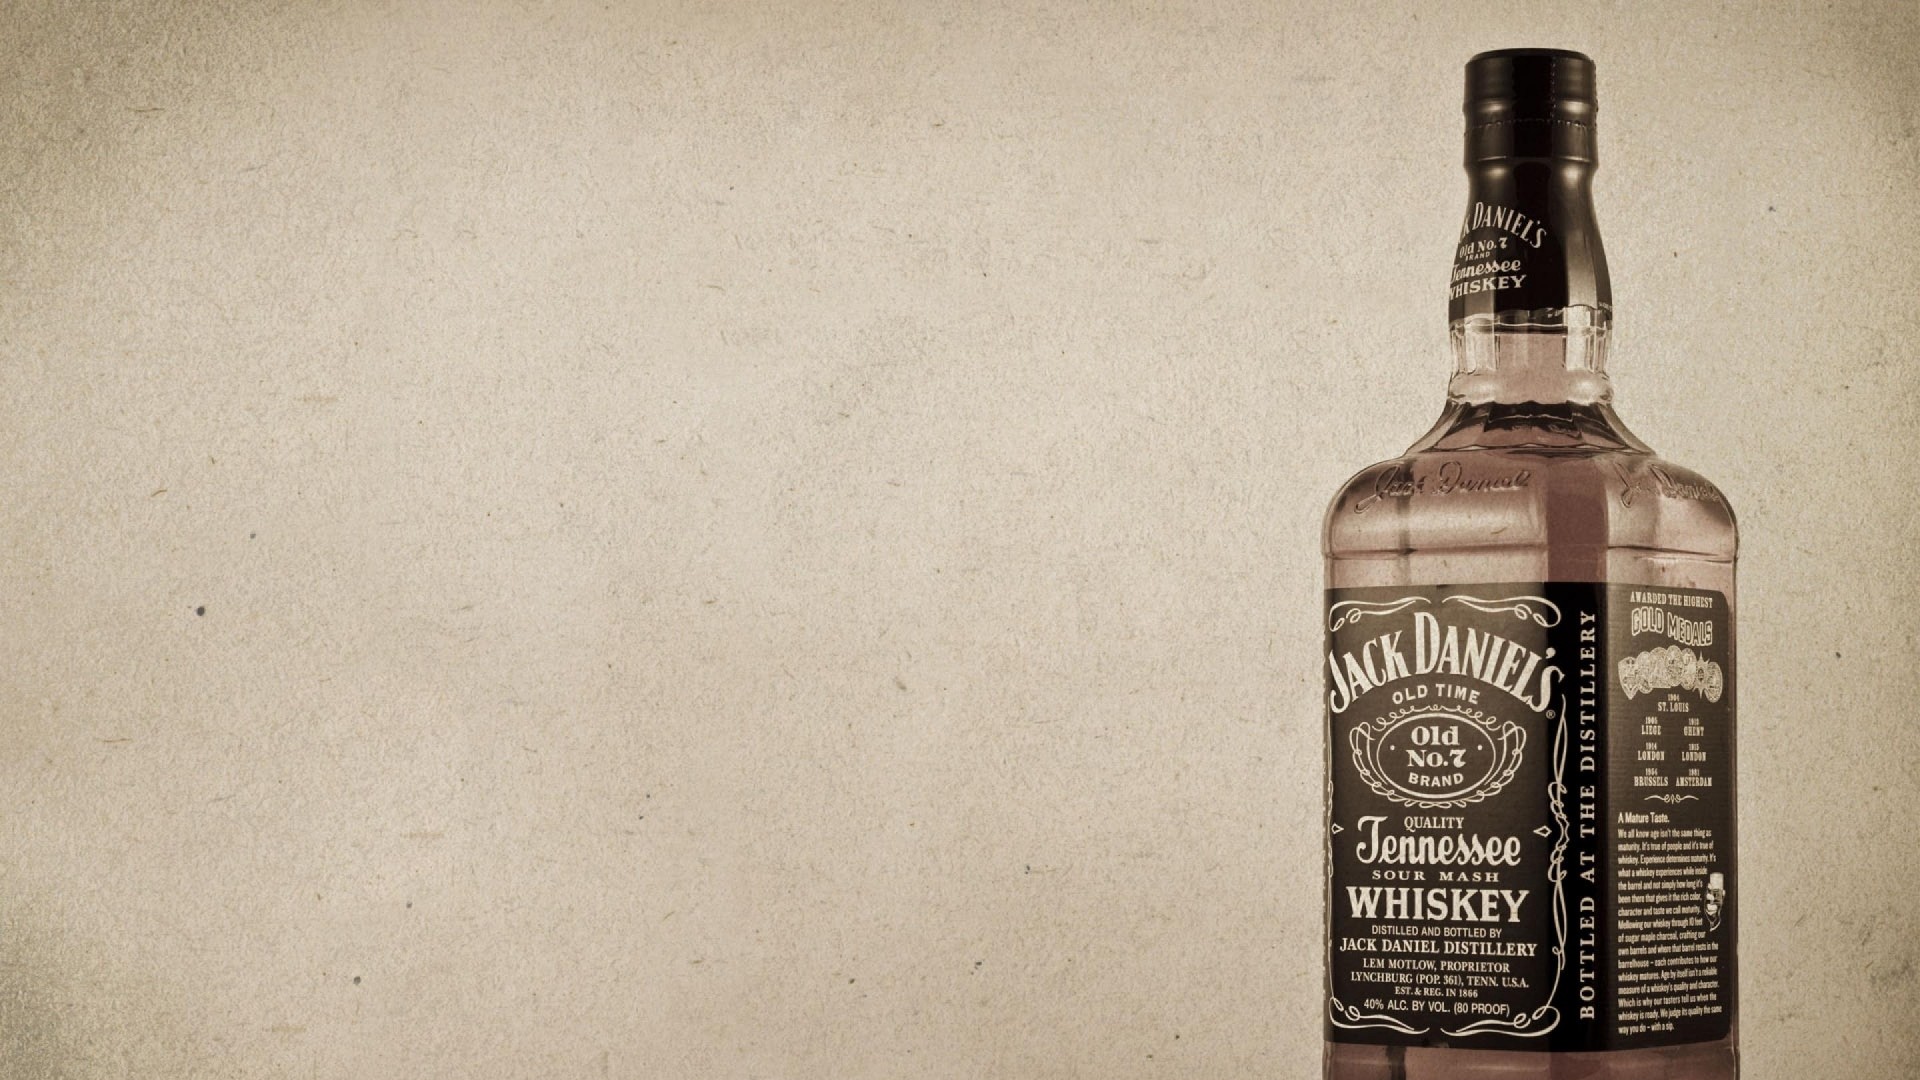 1920x1080 ... Background Full HD 1080p.  Wallpaper whiskey, jack daniels,  bottle, alcohol, vintage